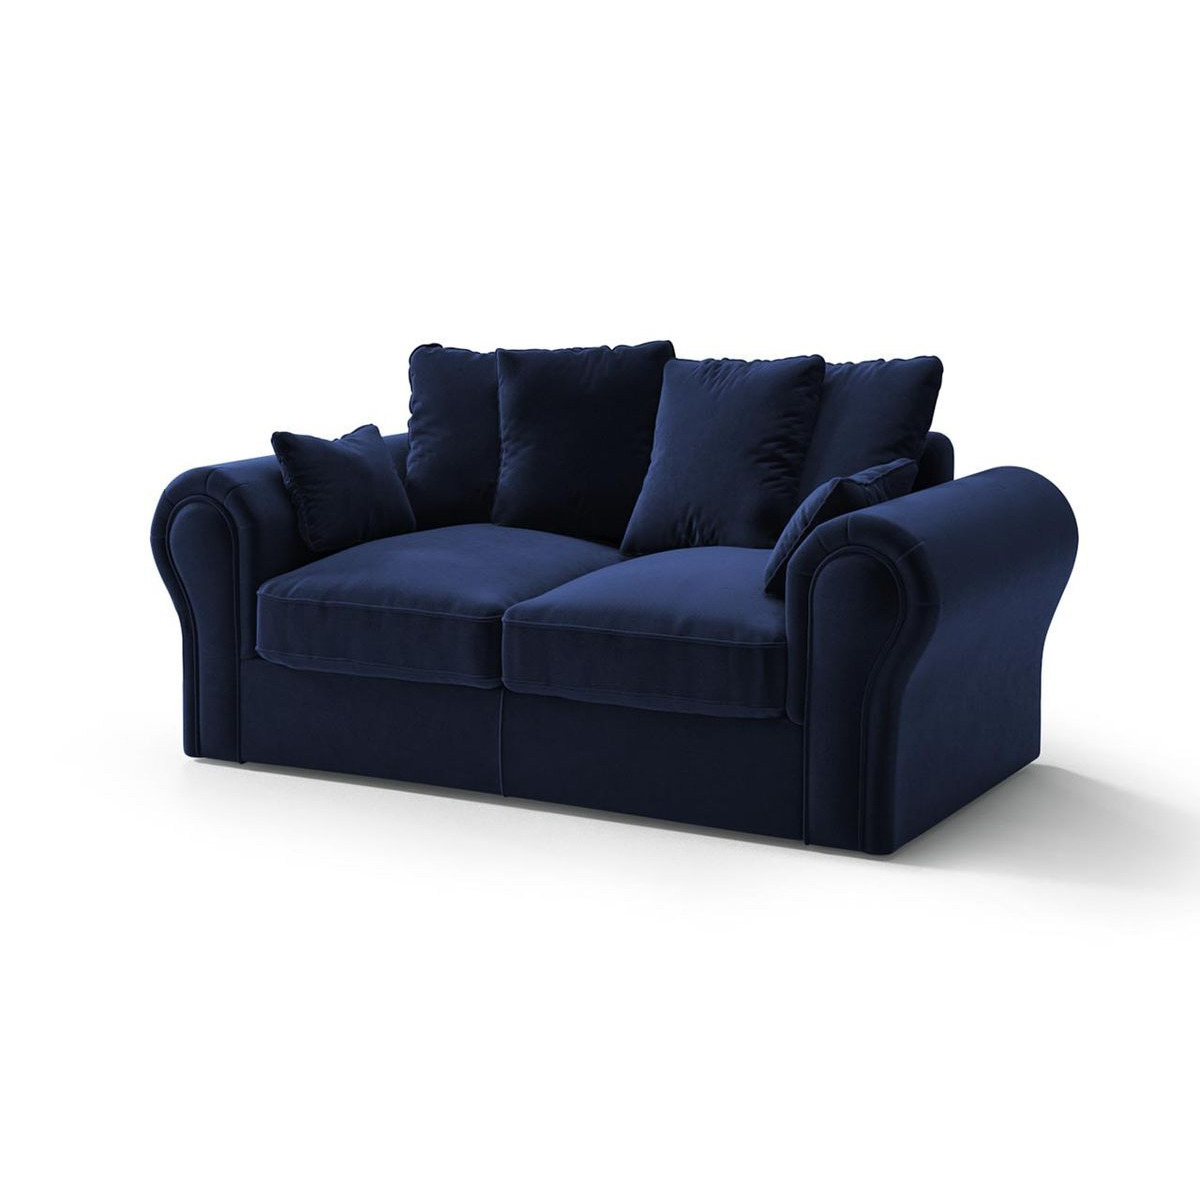 Baron 2 Seater Sofa, navy blue - image 1